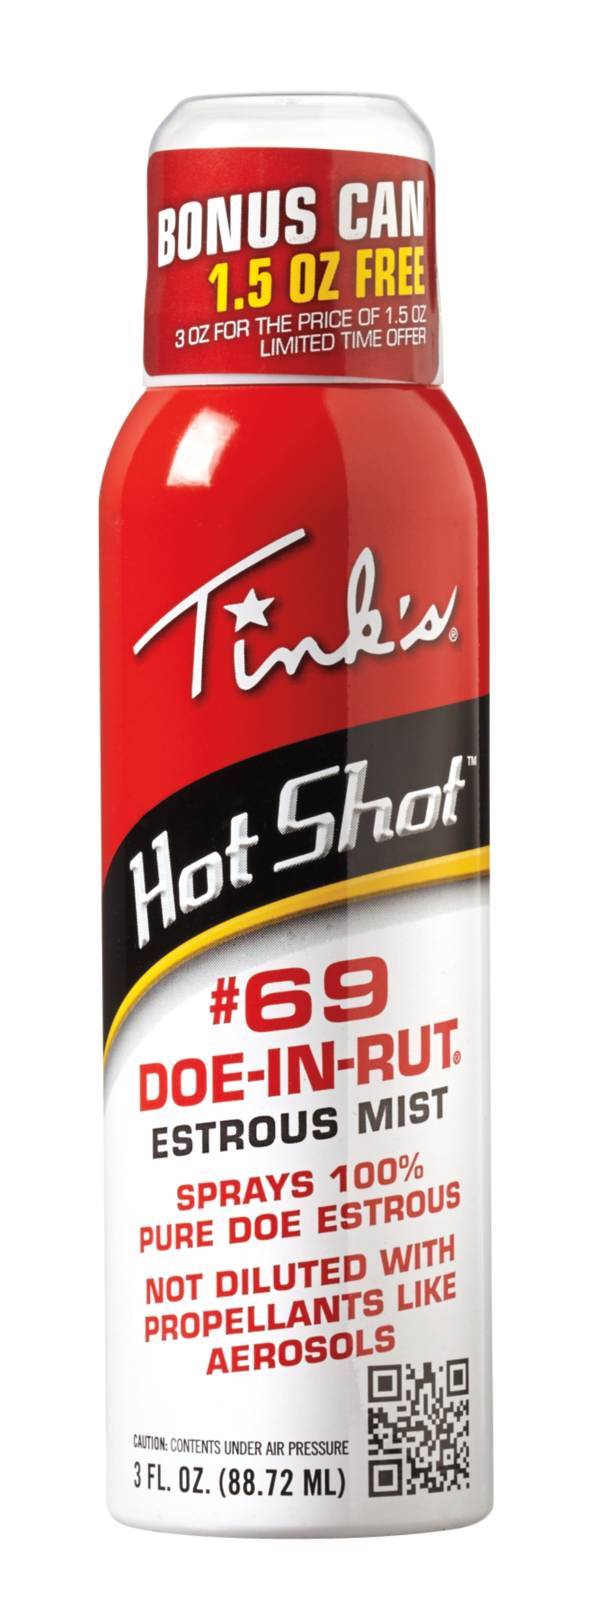 Tink's Hot Shot #69 Doe-In-Rut Mist Deer Lure product image